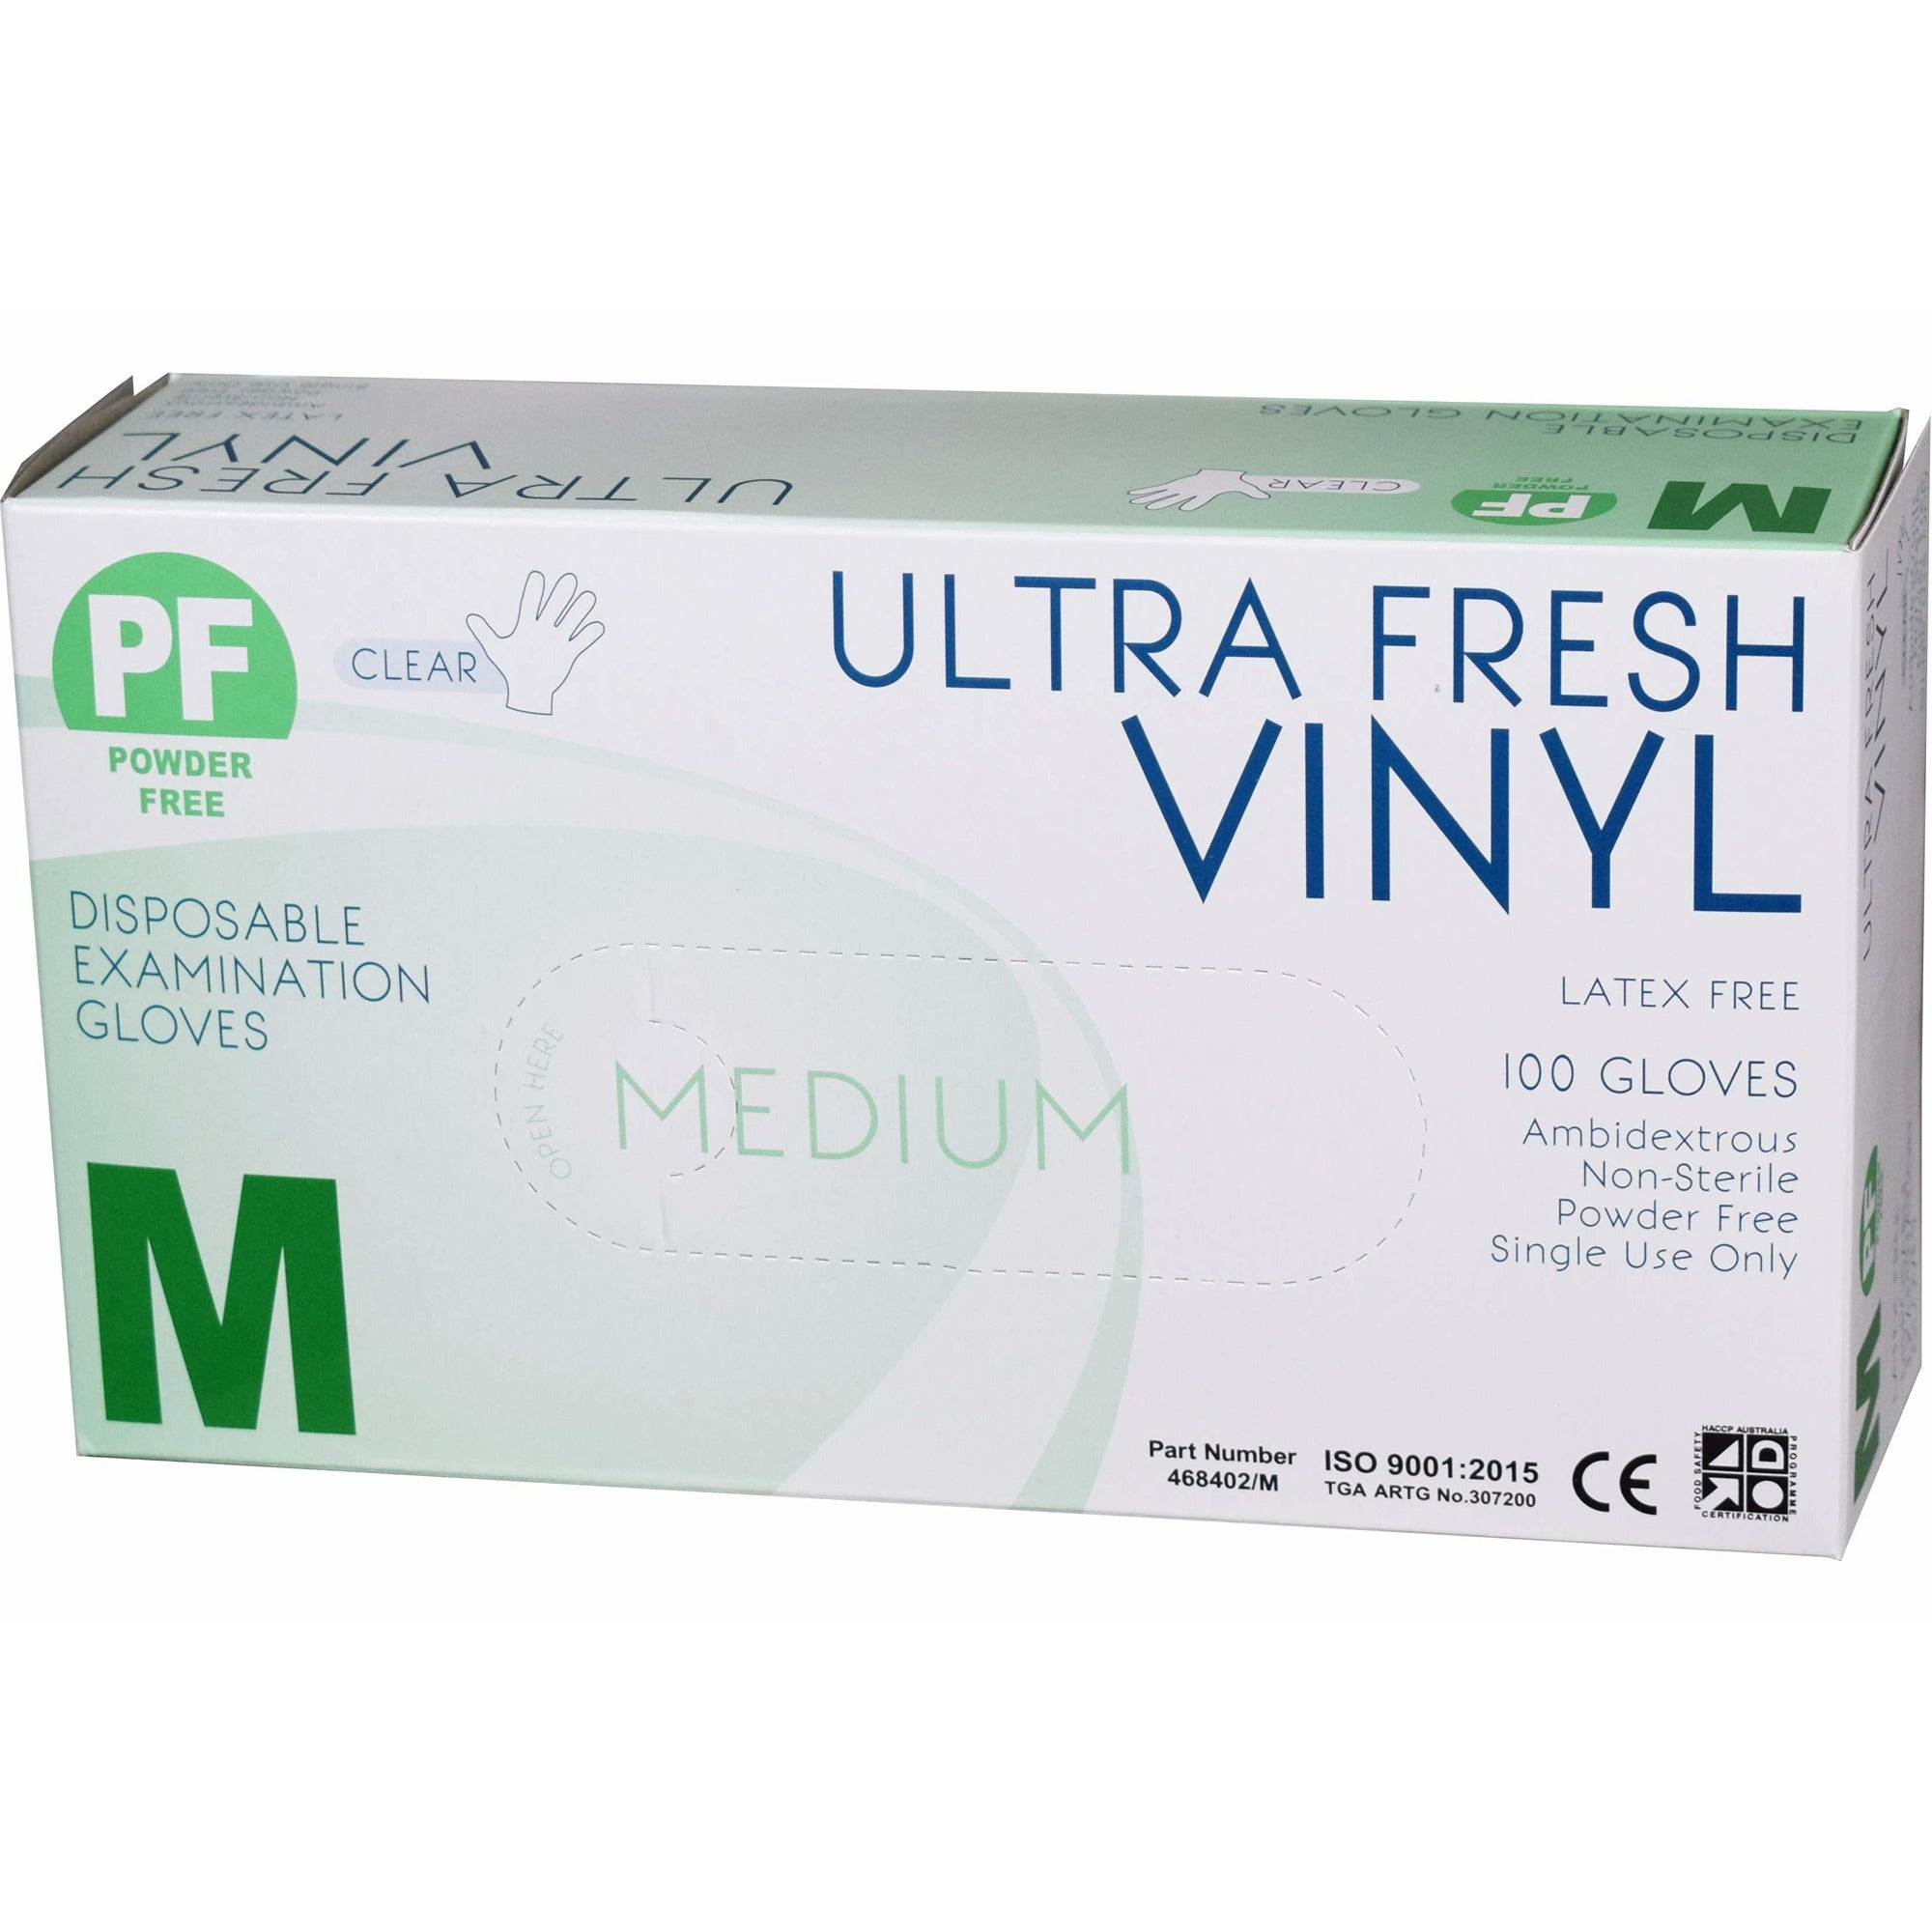 Gloves Ultra Fresh Clear Vinyl P/F Medium Box of 100